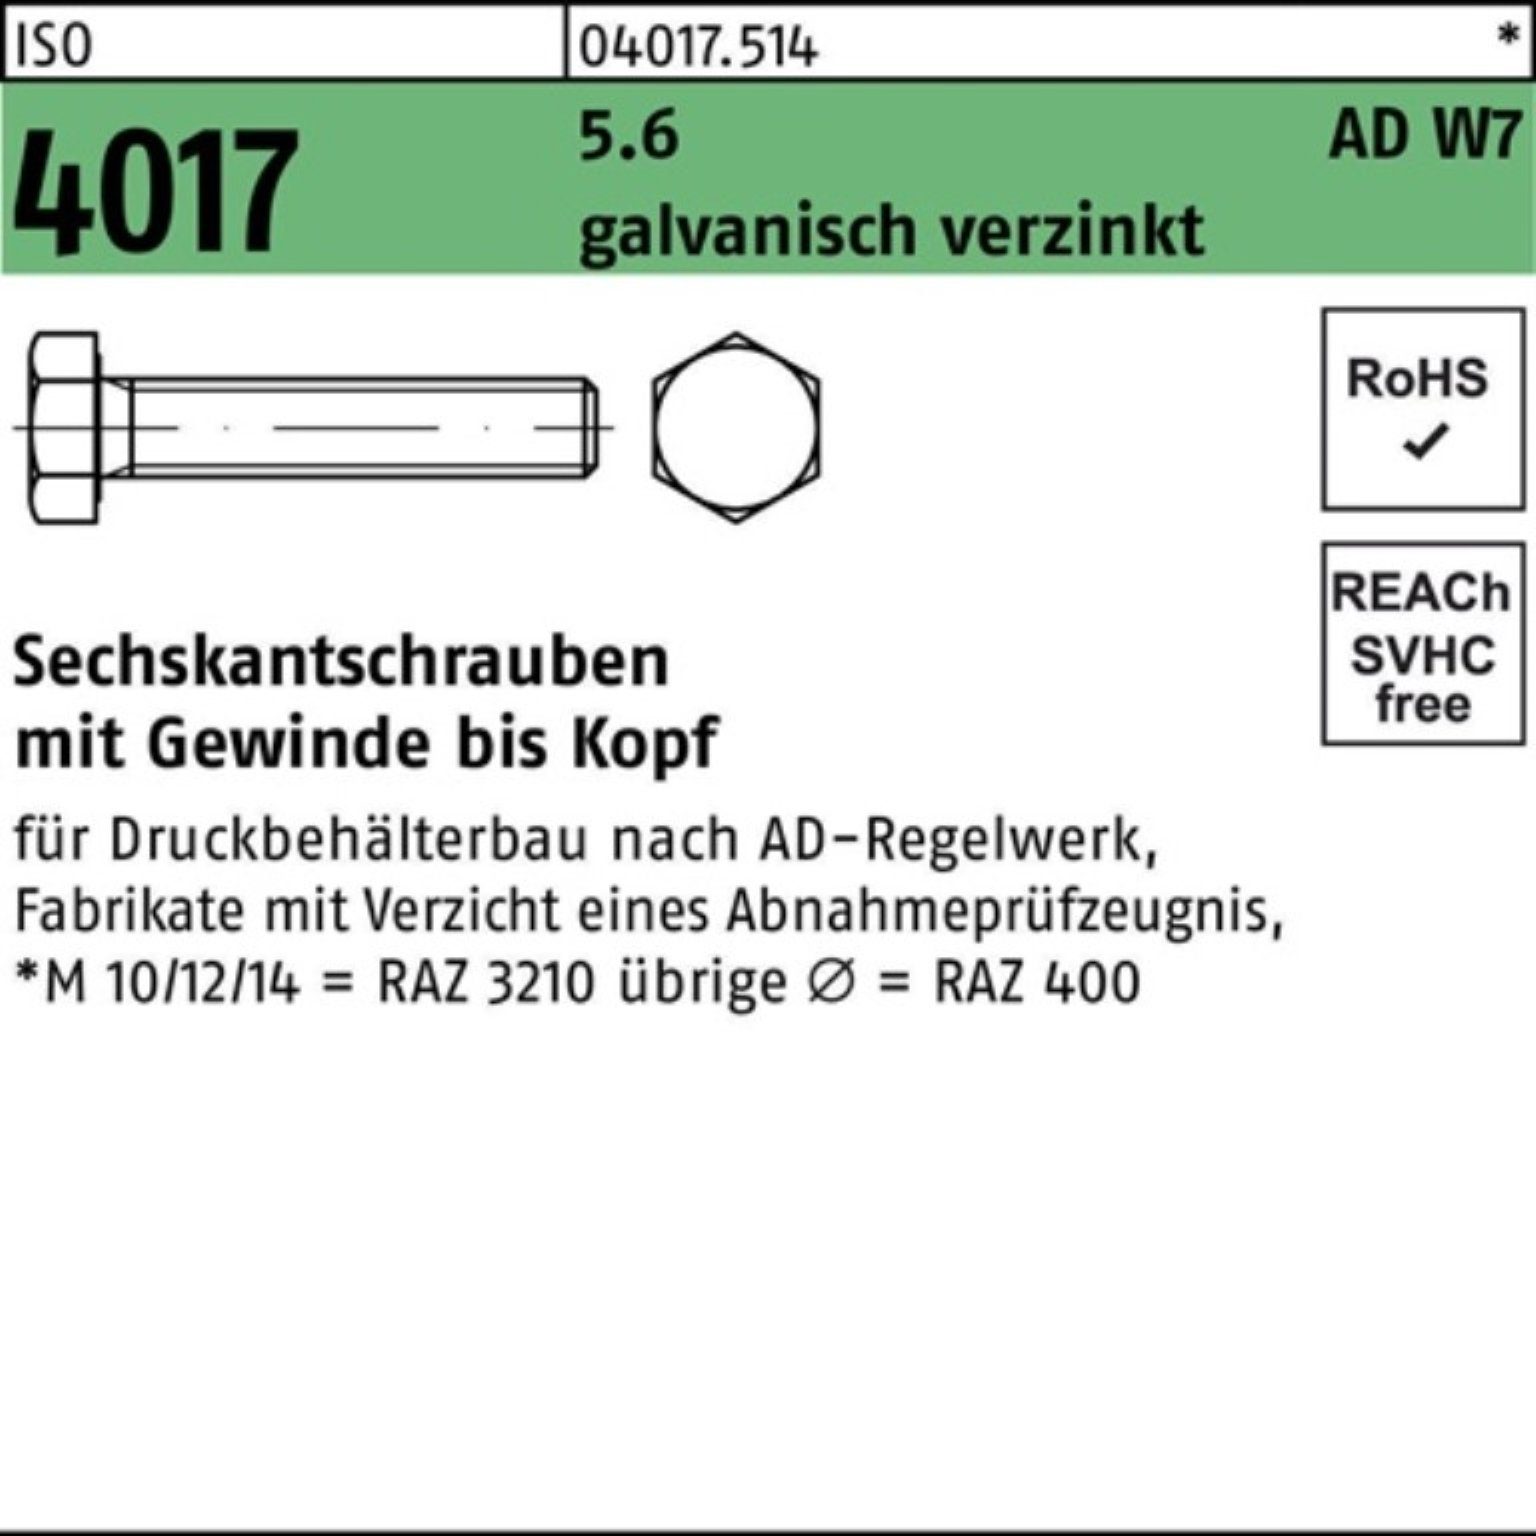 VG Sechskantschraube M10x Pack 4017 70 AD 5.6 galv.verz. ISO 100er W7 Sechskantschraube Bufab